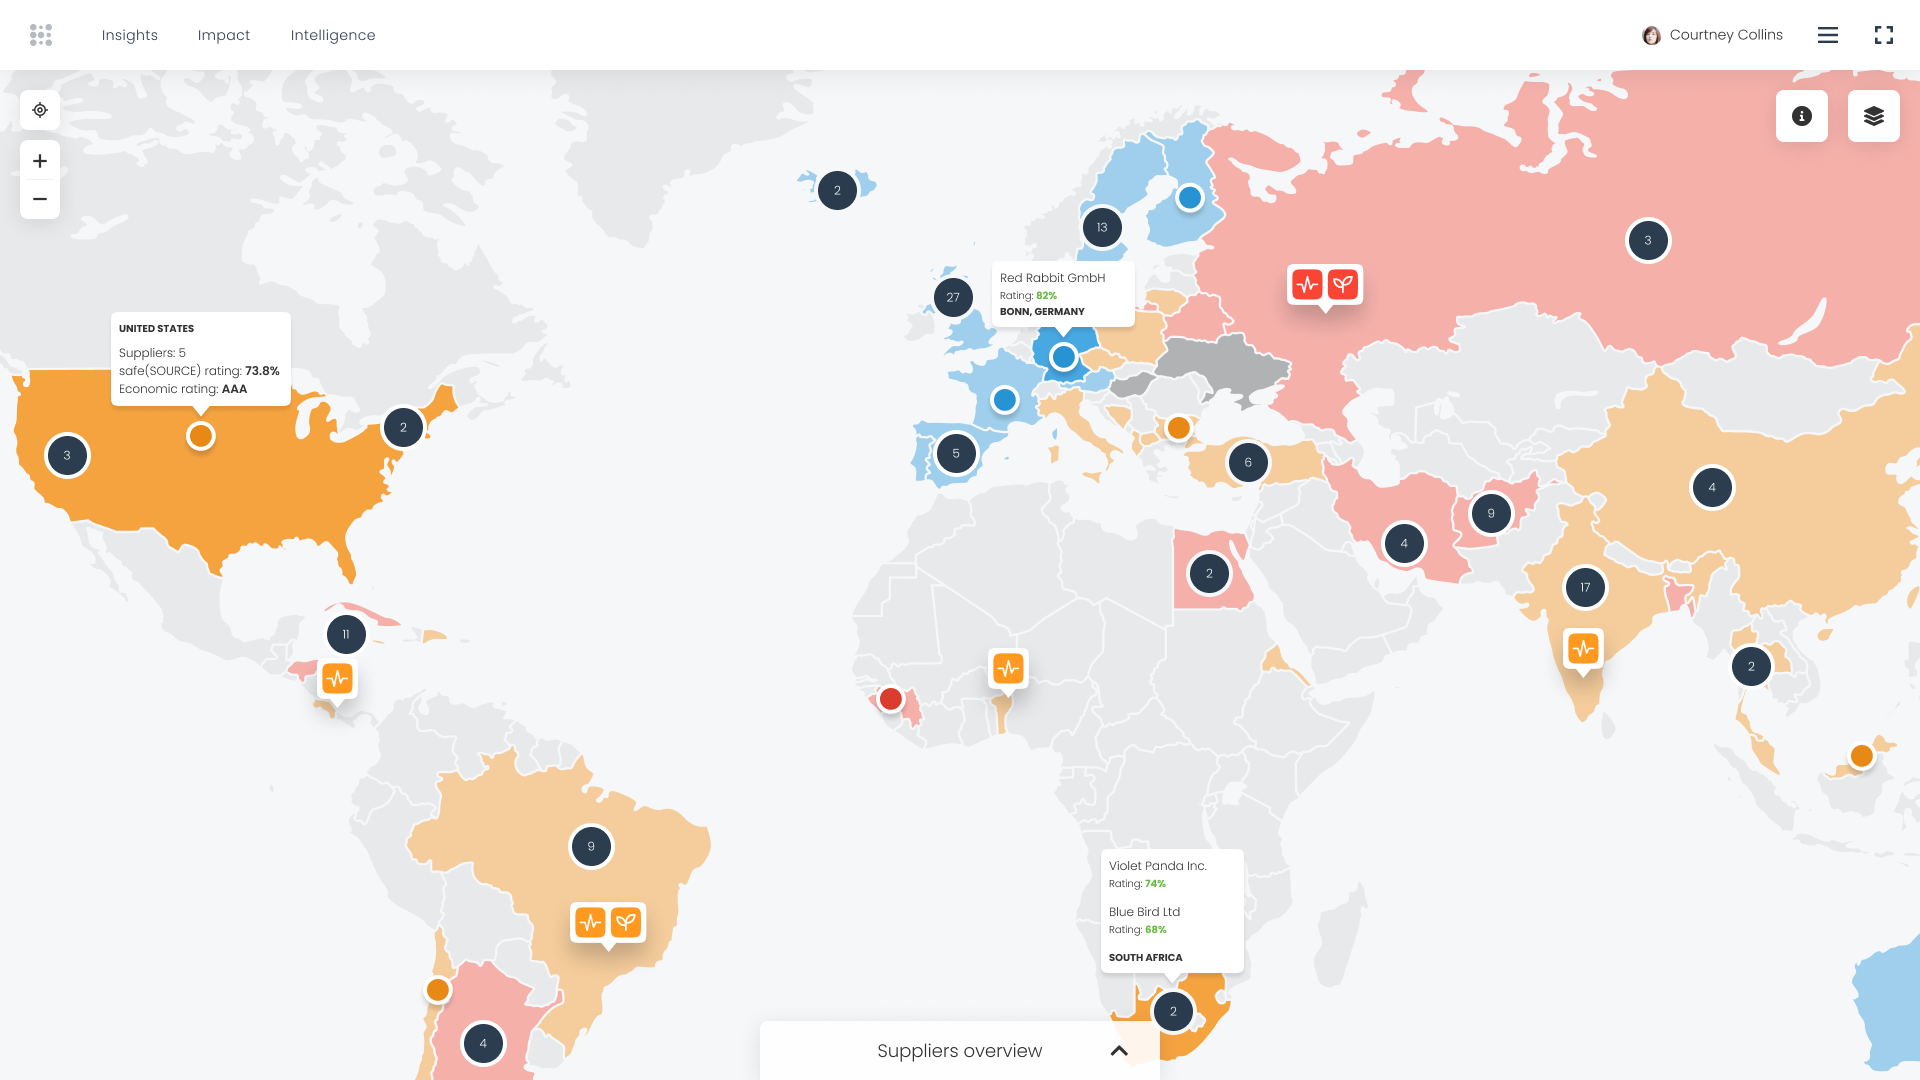 Supply base global map